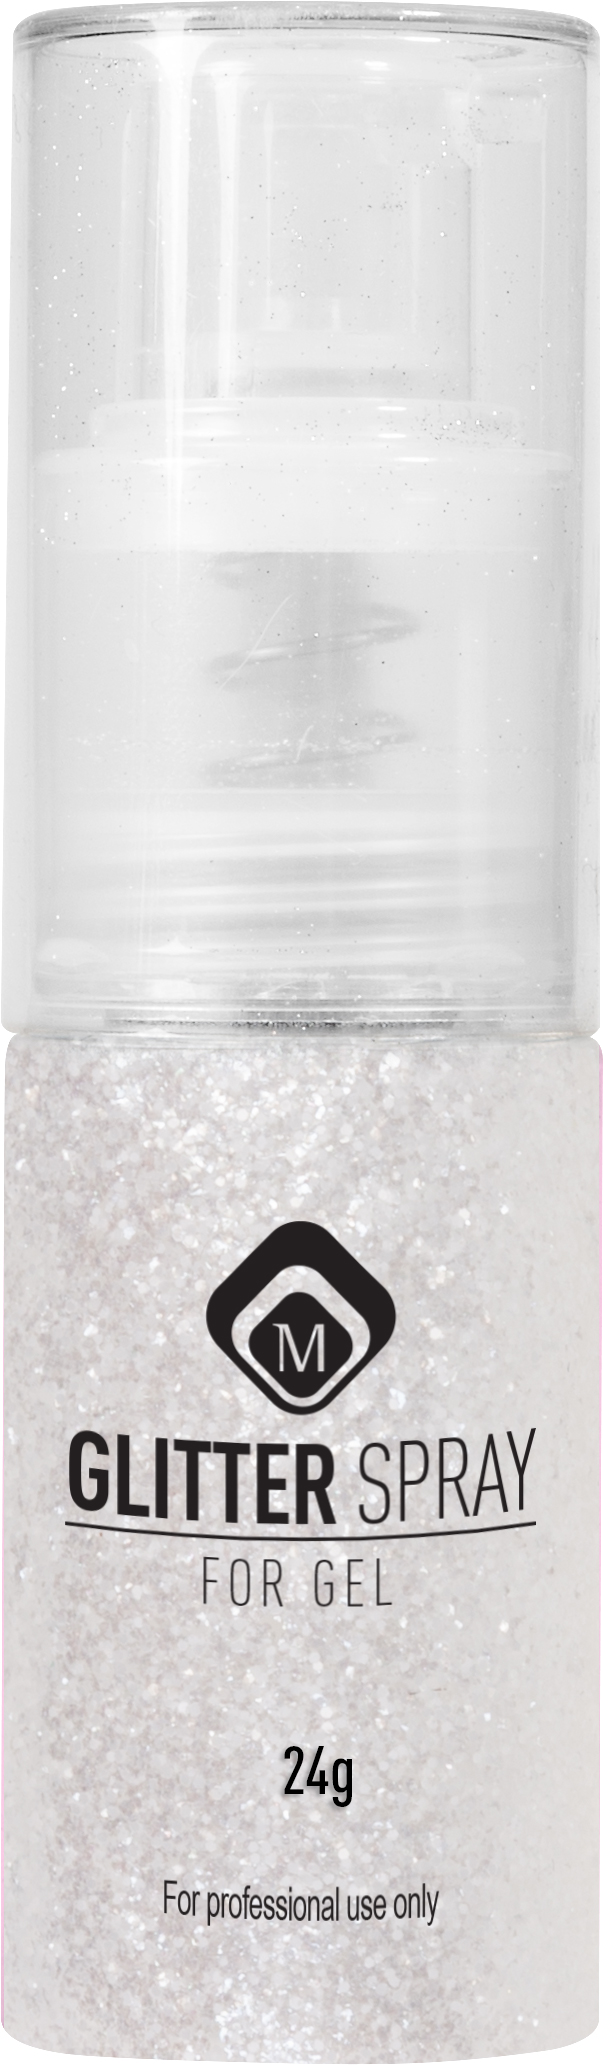 Glitter Spray White 24 g.